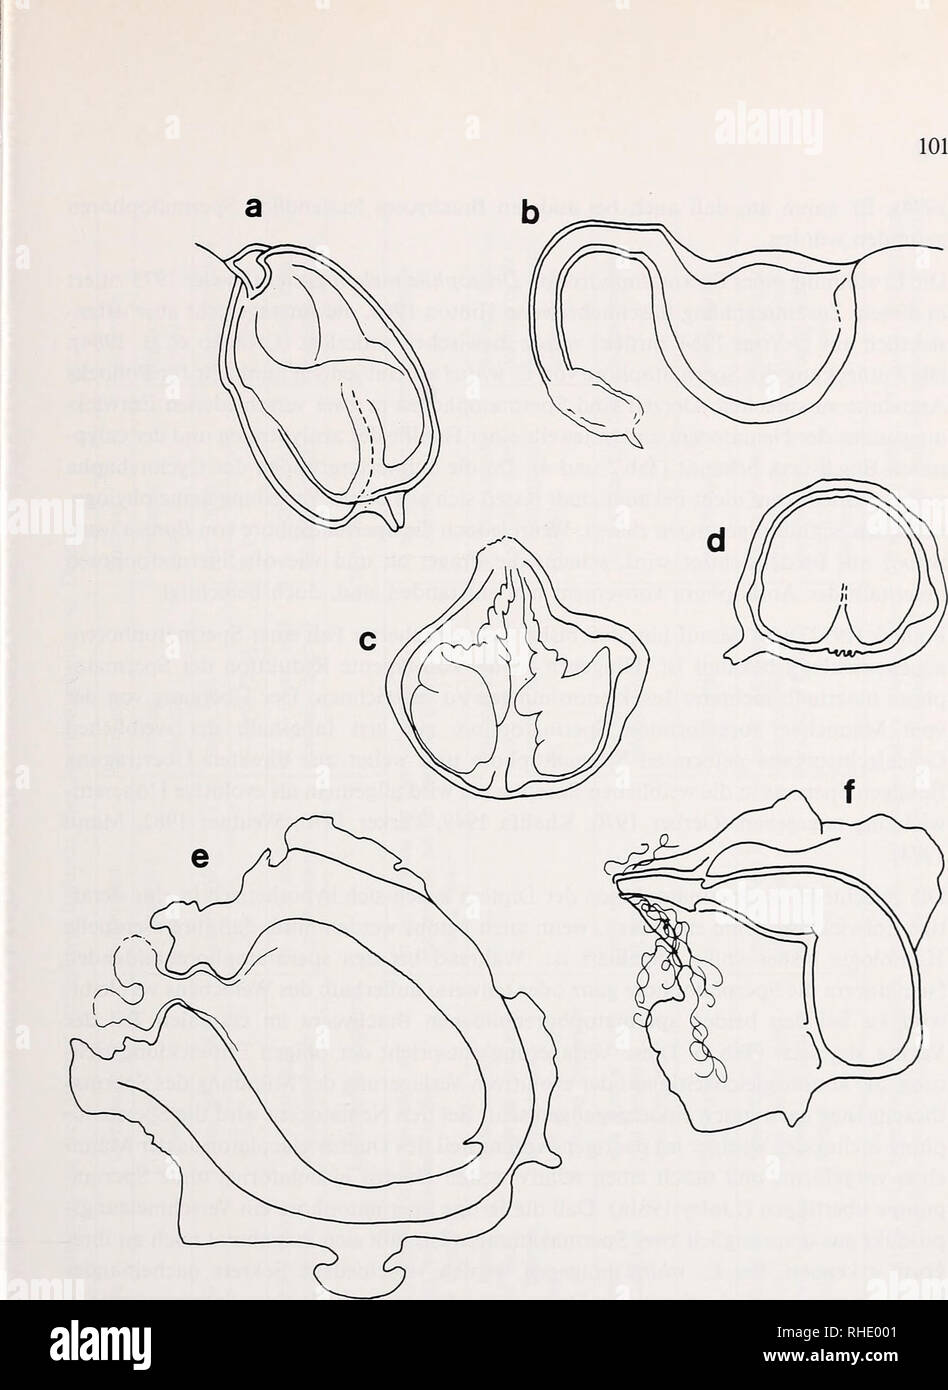 . Bonner zoologische Monographien. Zoology. Abb.46: Spermatophoren von verschiedenen Dipteren, (a) Dilophus febrilis (Bibionidae), eigene Unter- suchung; (b) Culicoides melleus (Ceratopogonidae) nach Linley &amp; Adams (1971); (c) Glypioiendipes paripes (Chironomidae) nach Nielsen (1959); (d) Simulium salopiense (Siniuliidae) nach Davics (1965); (e) Glossina morsitans (Glossinidae) nach Kokwaro et al. (1981); (0 Cyrtodiopsis whitei (Diopsidae), eigene Untersuchung.. Please note that these images are extracted from scanned page images that may have been digitally enhanced for readability - colo Stock Photo